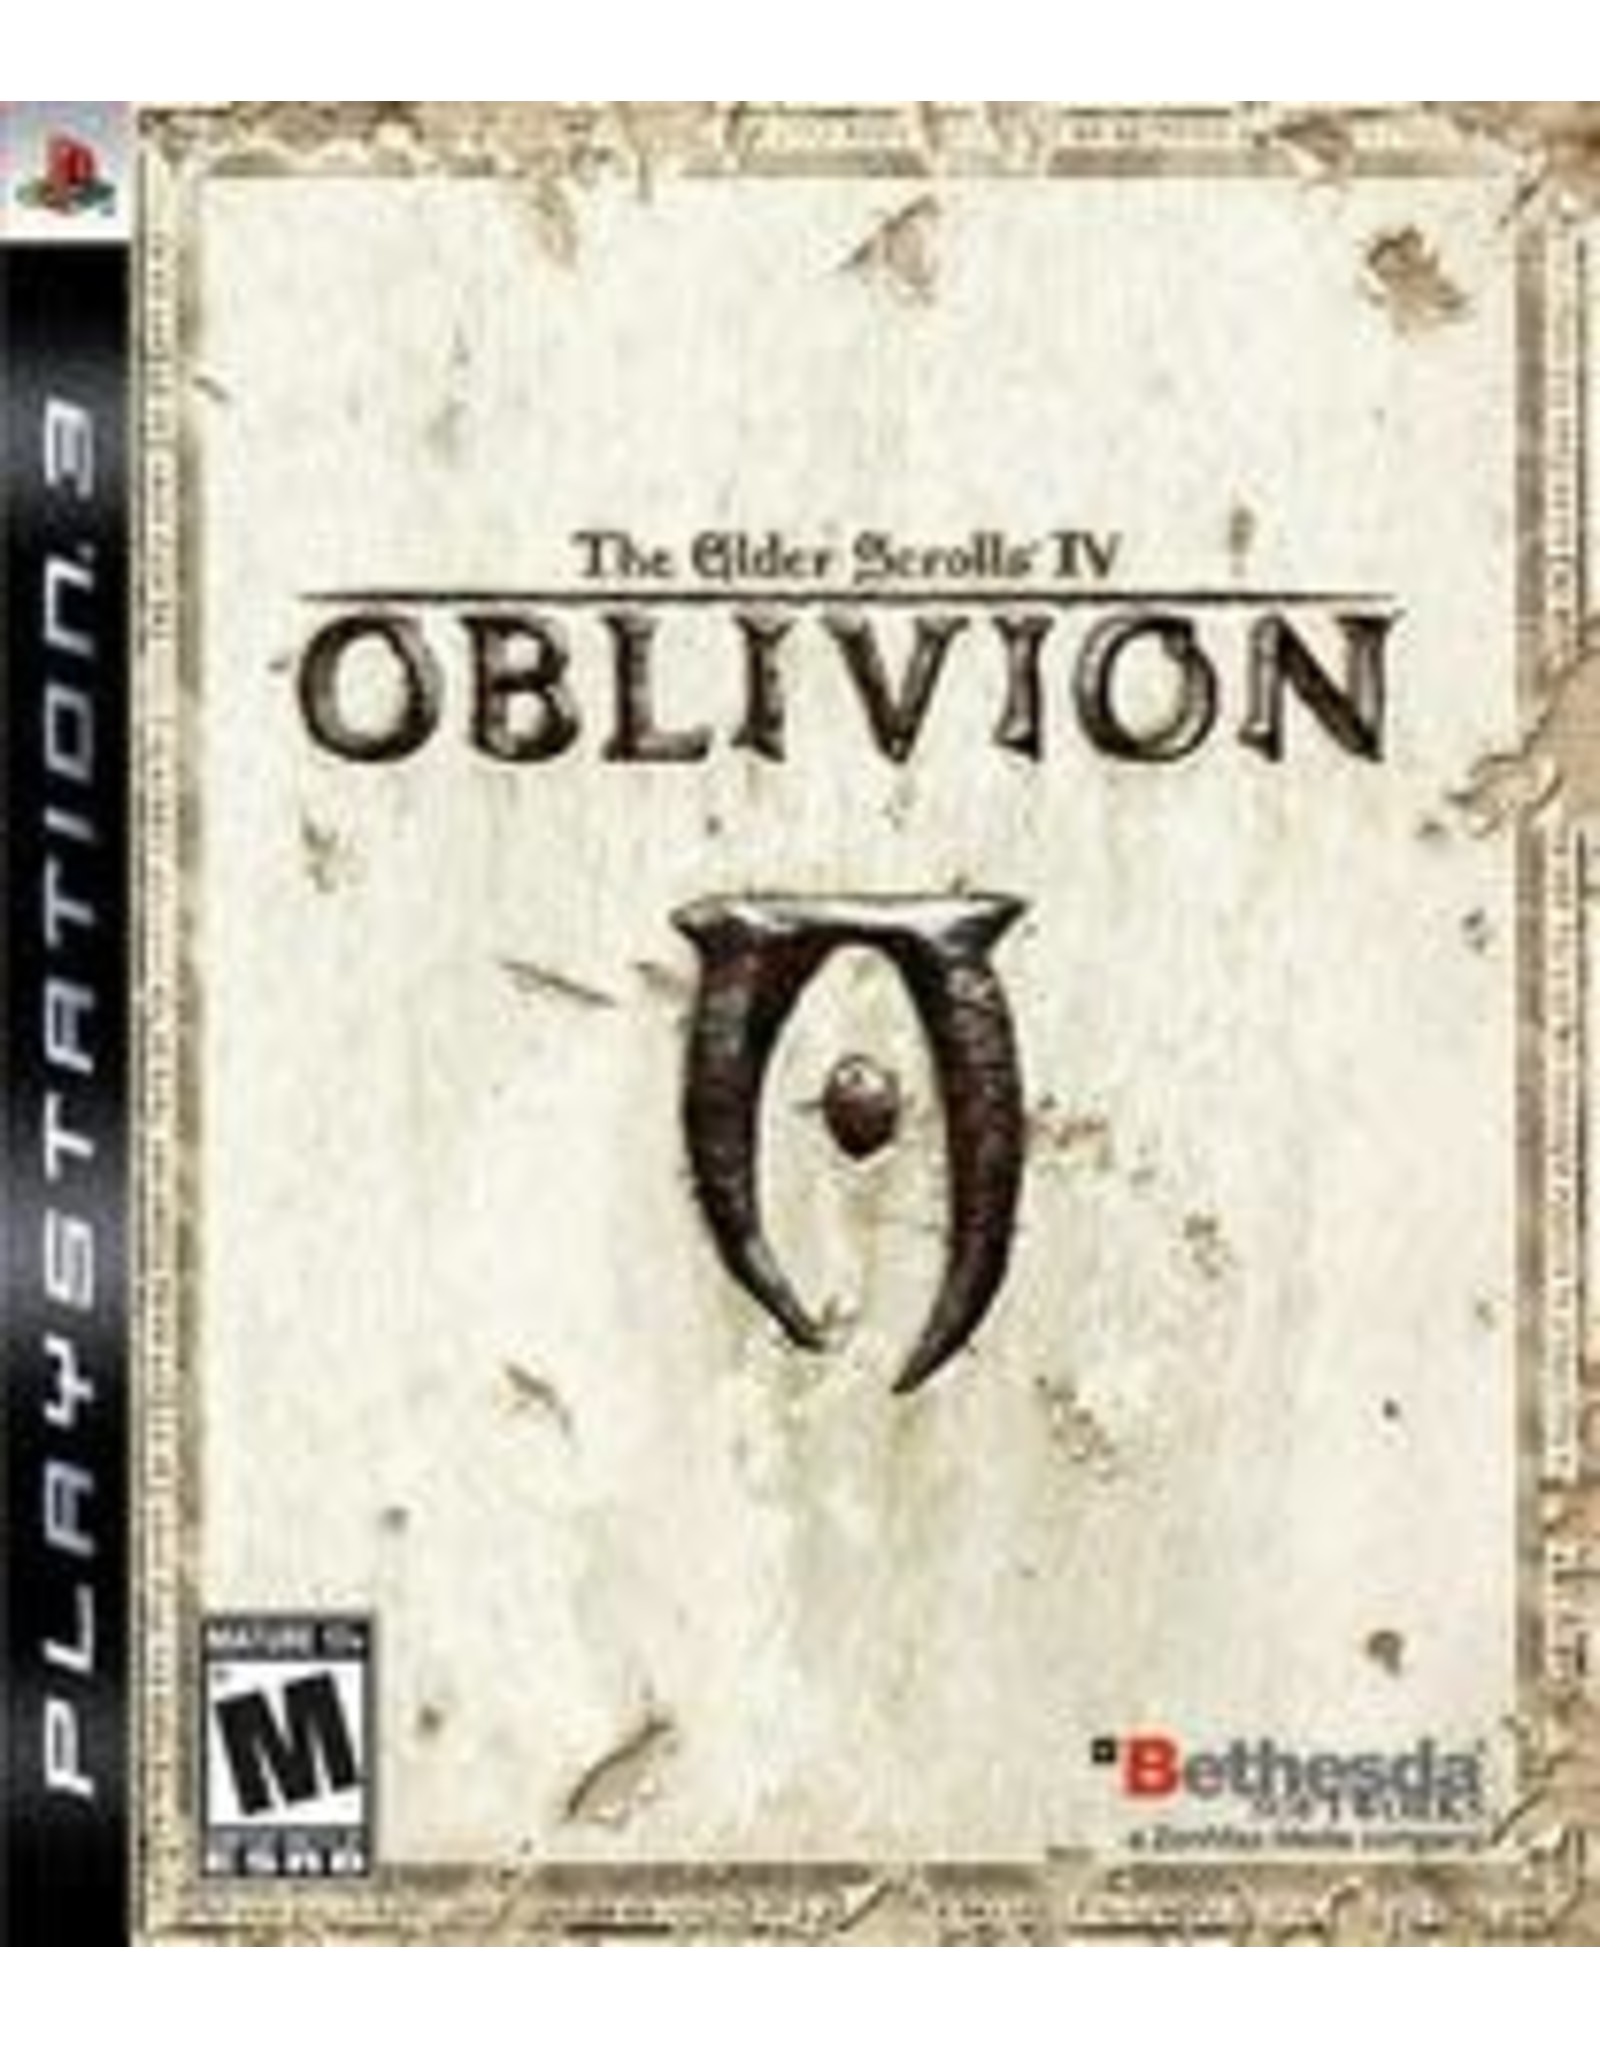 Playstation 3 Oblivion, Elder Scrolls IV (CiB)